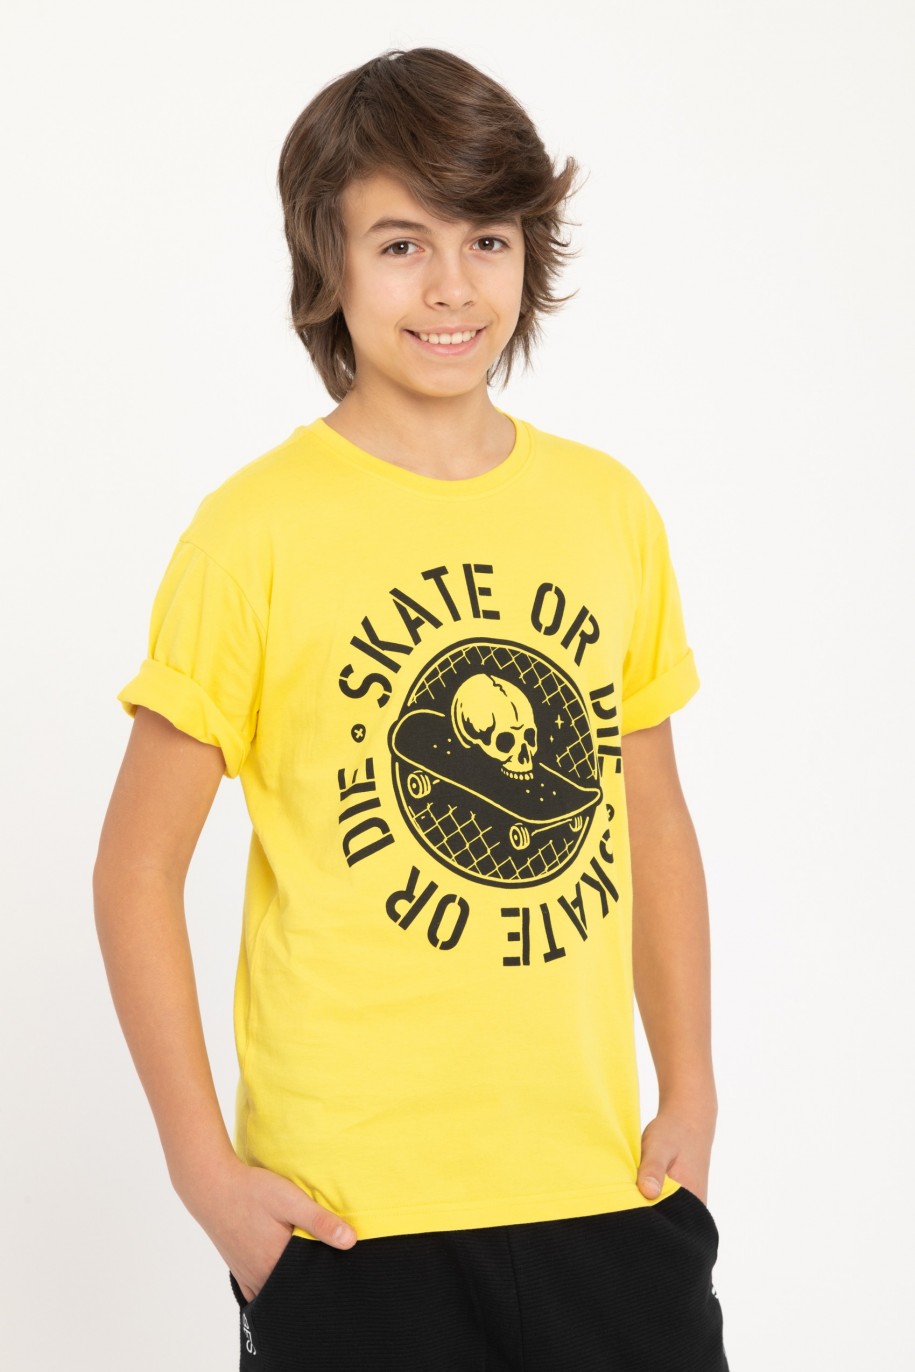 żółty t-shirt dla chłopaka skate or die reporter young